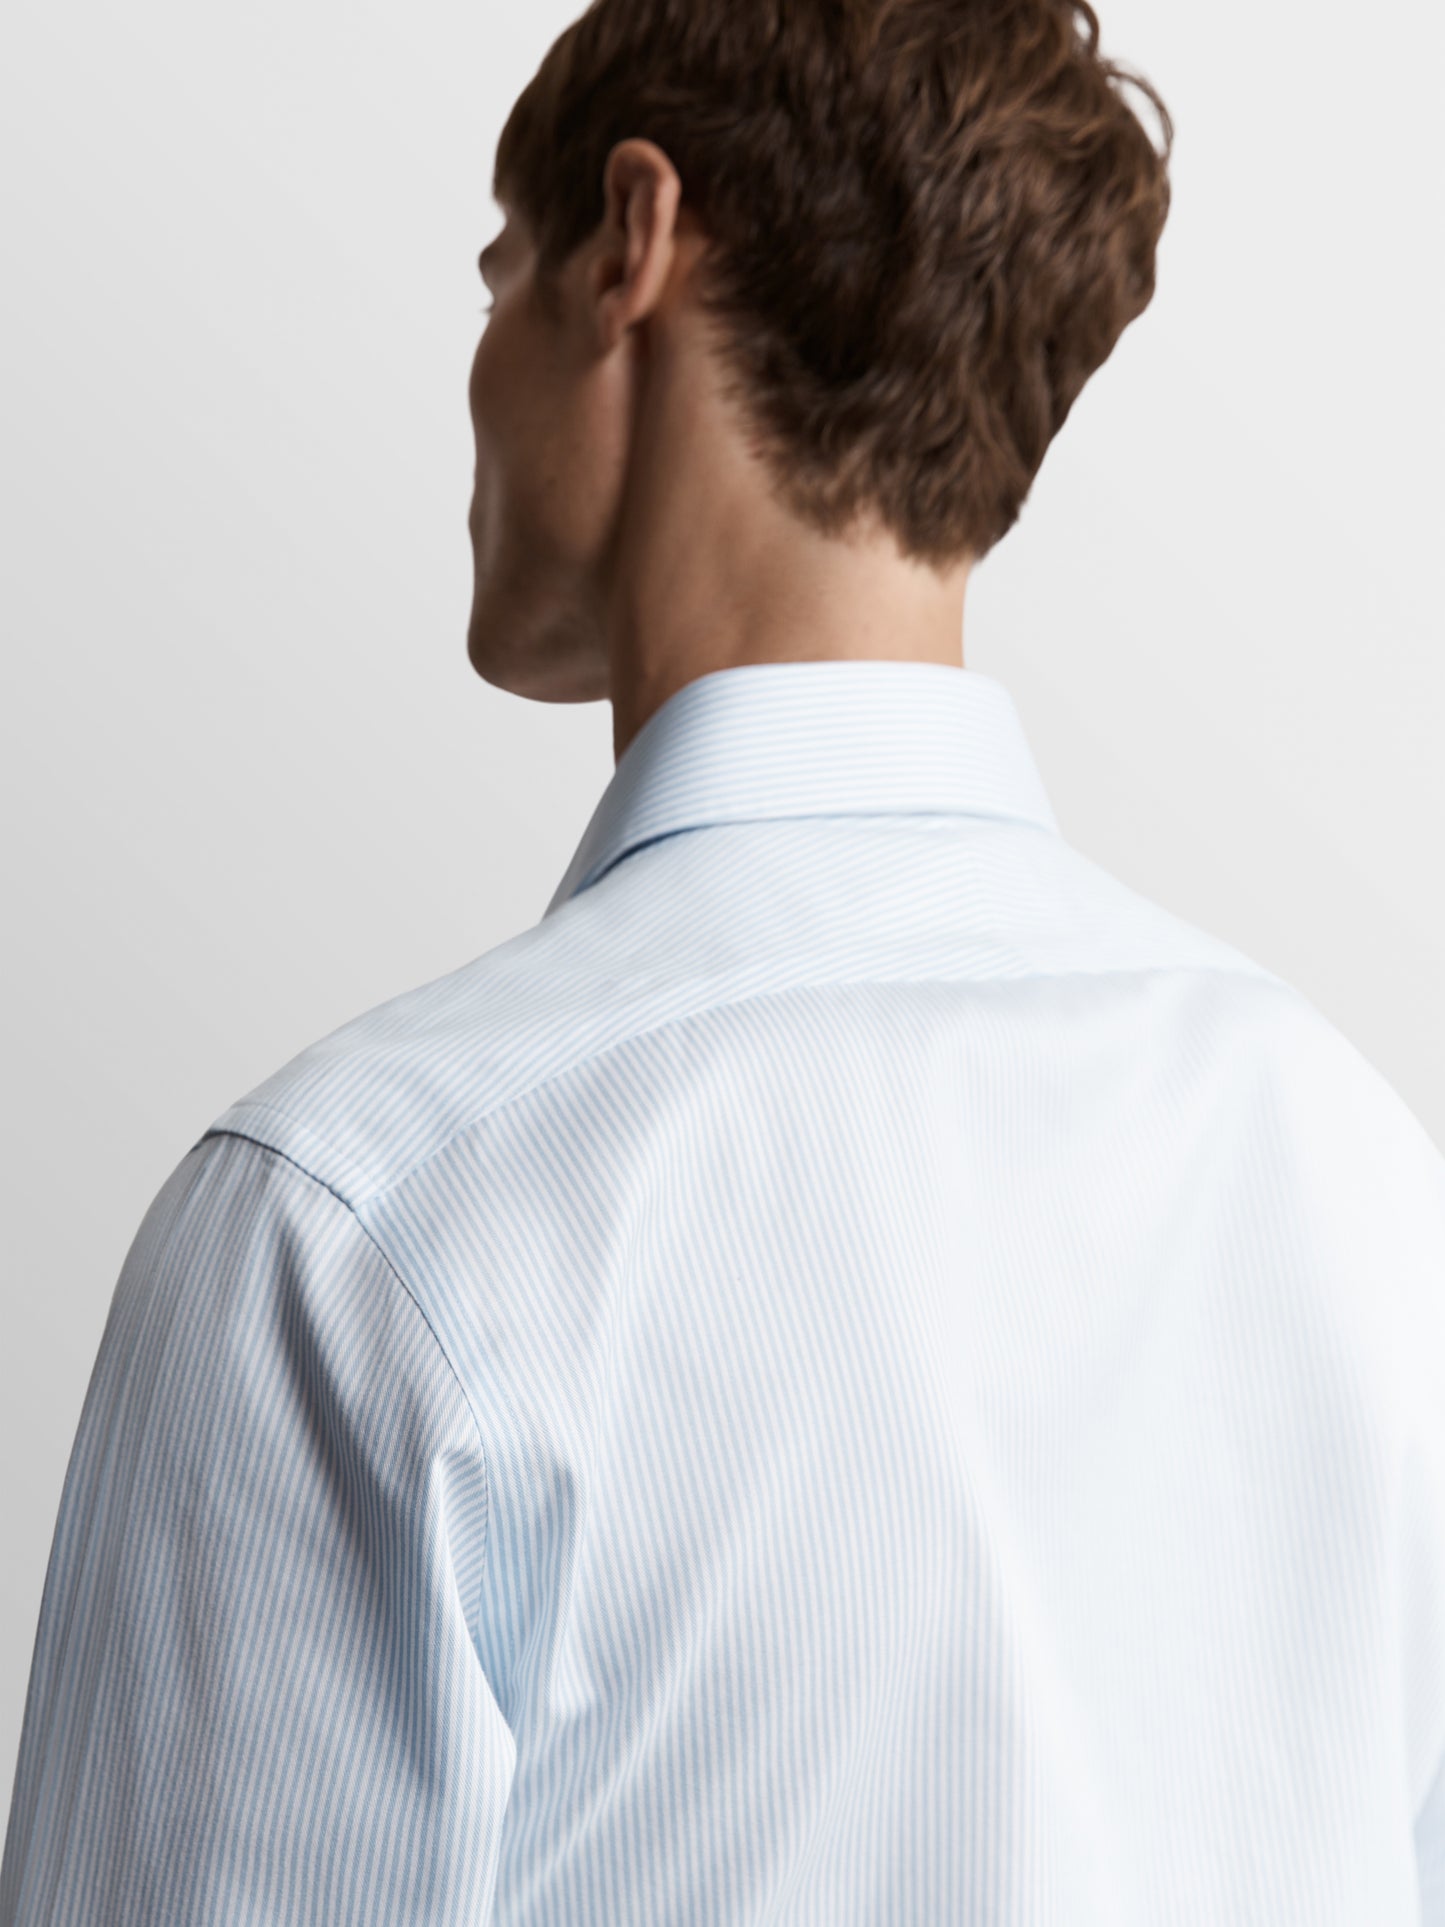 Non-Iron Light Blue Bengal Stripe Twill Regular Fit Single Cuff Classic Collar Shirt